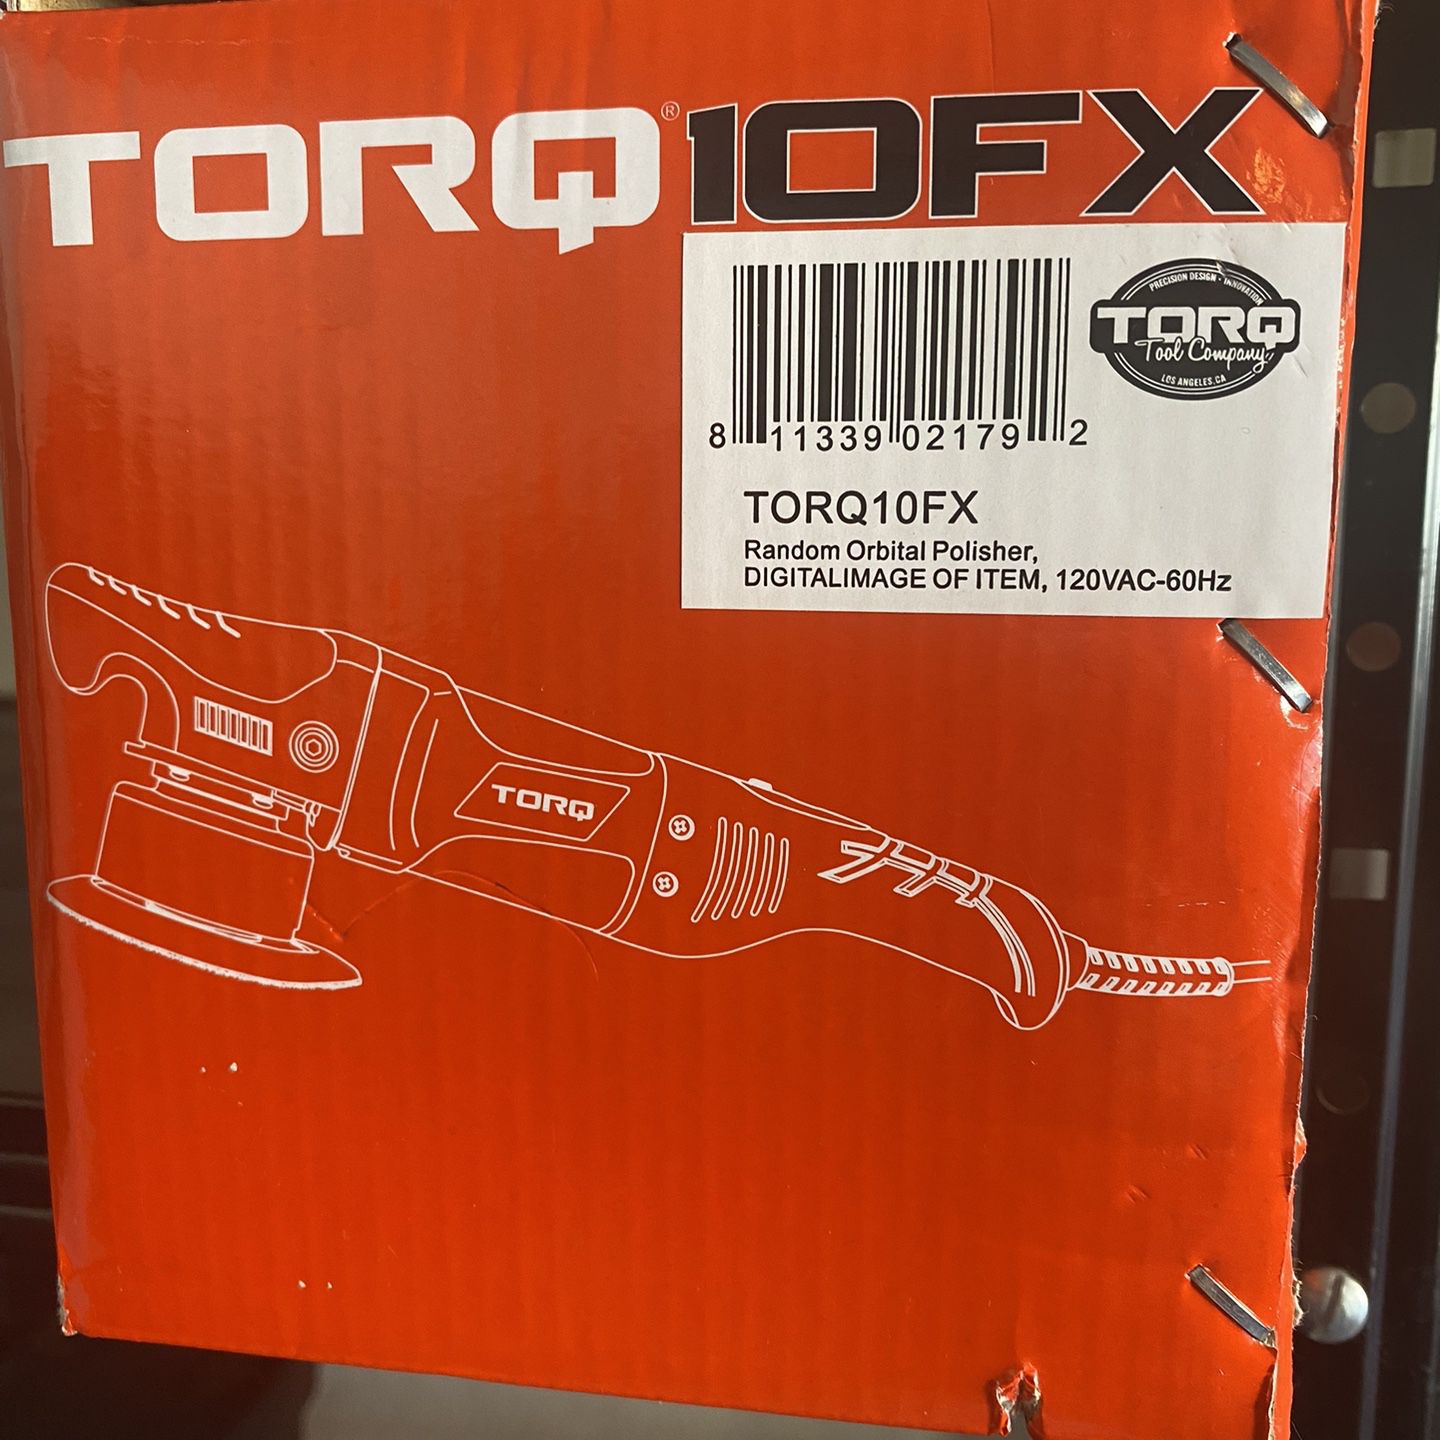 Torq 10FX Random Orbital Polisher